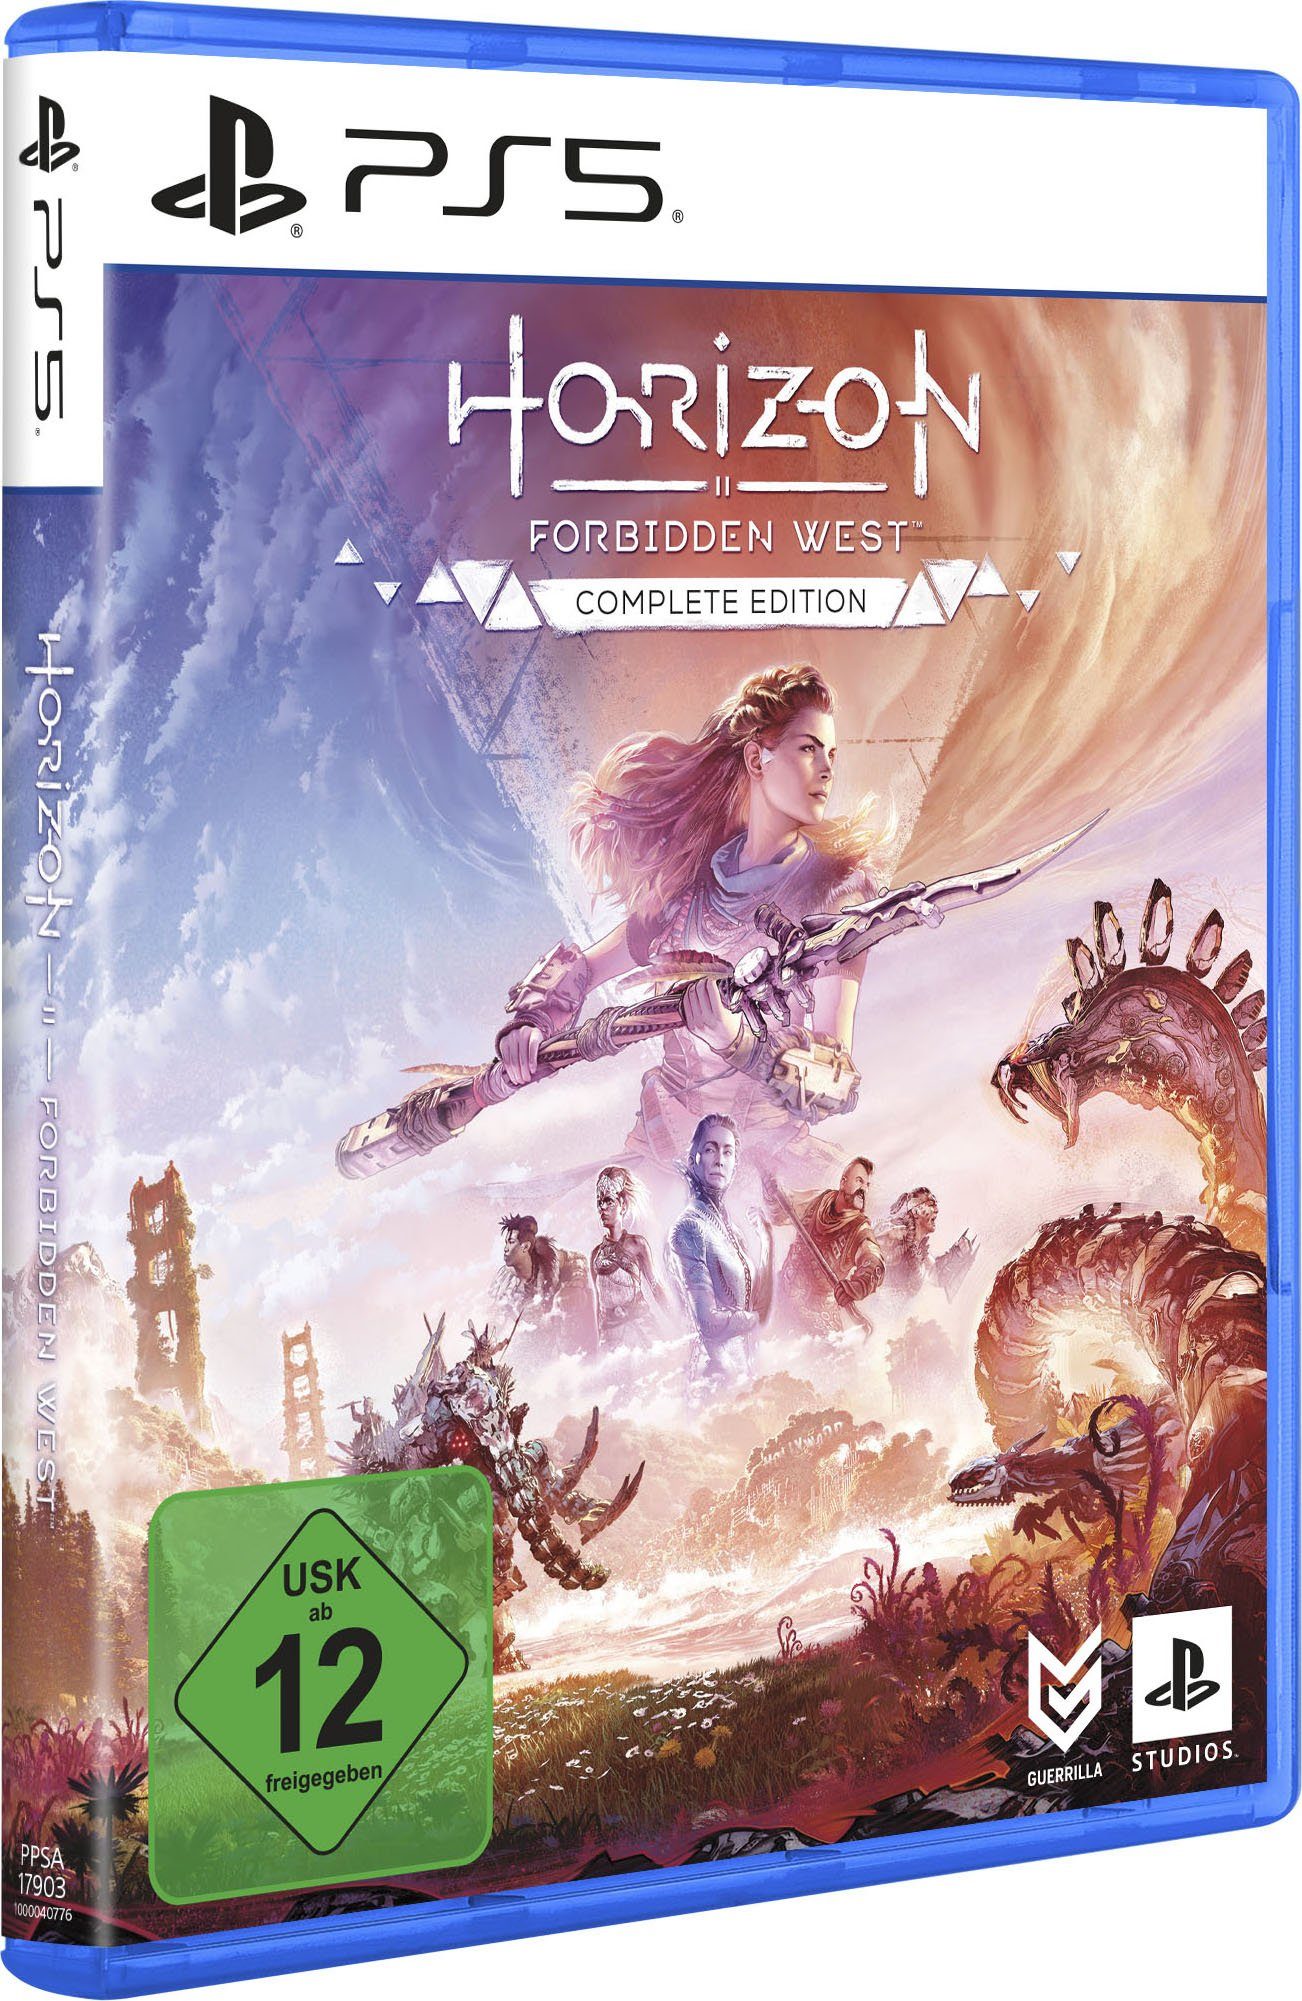 5 Horizon Edition West: Forbidden Complete PlayStation